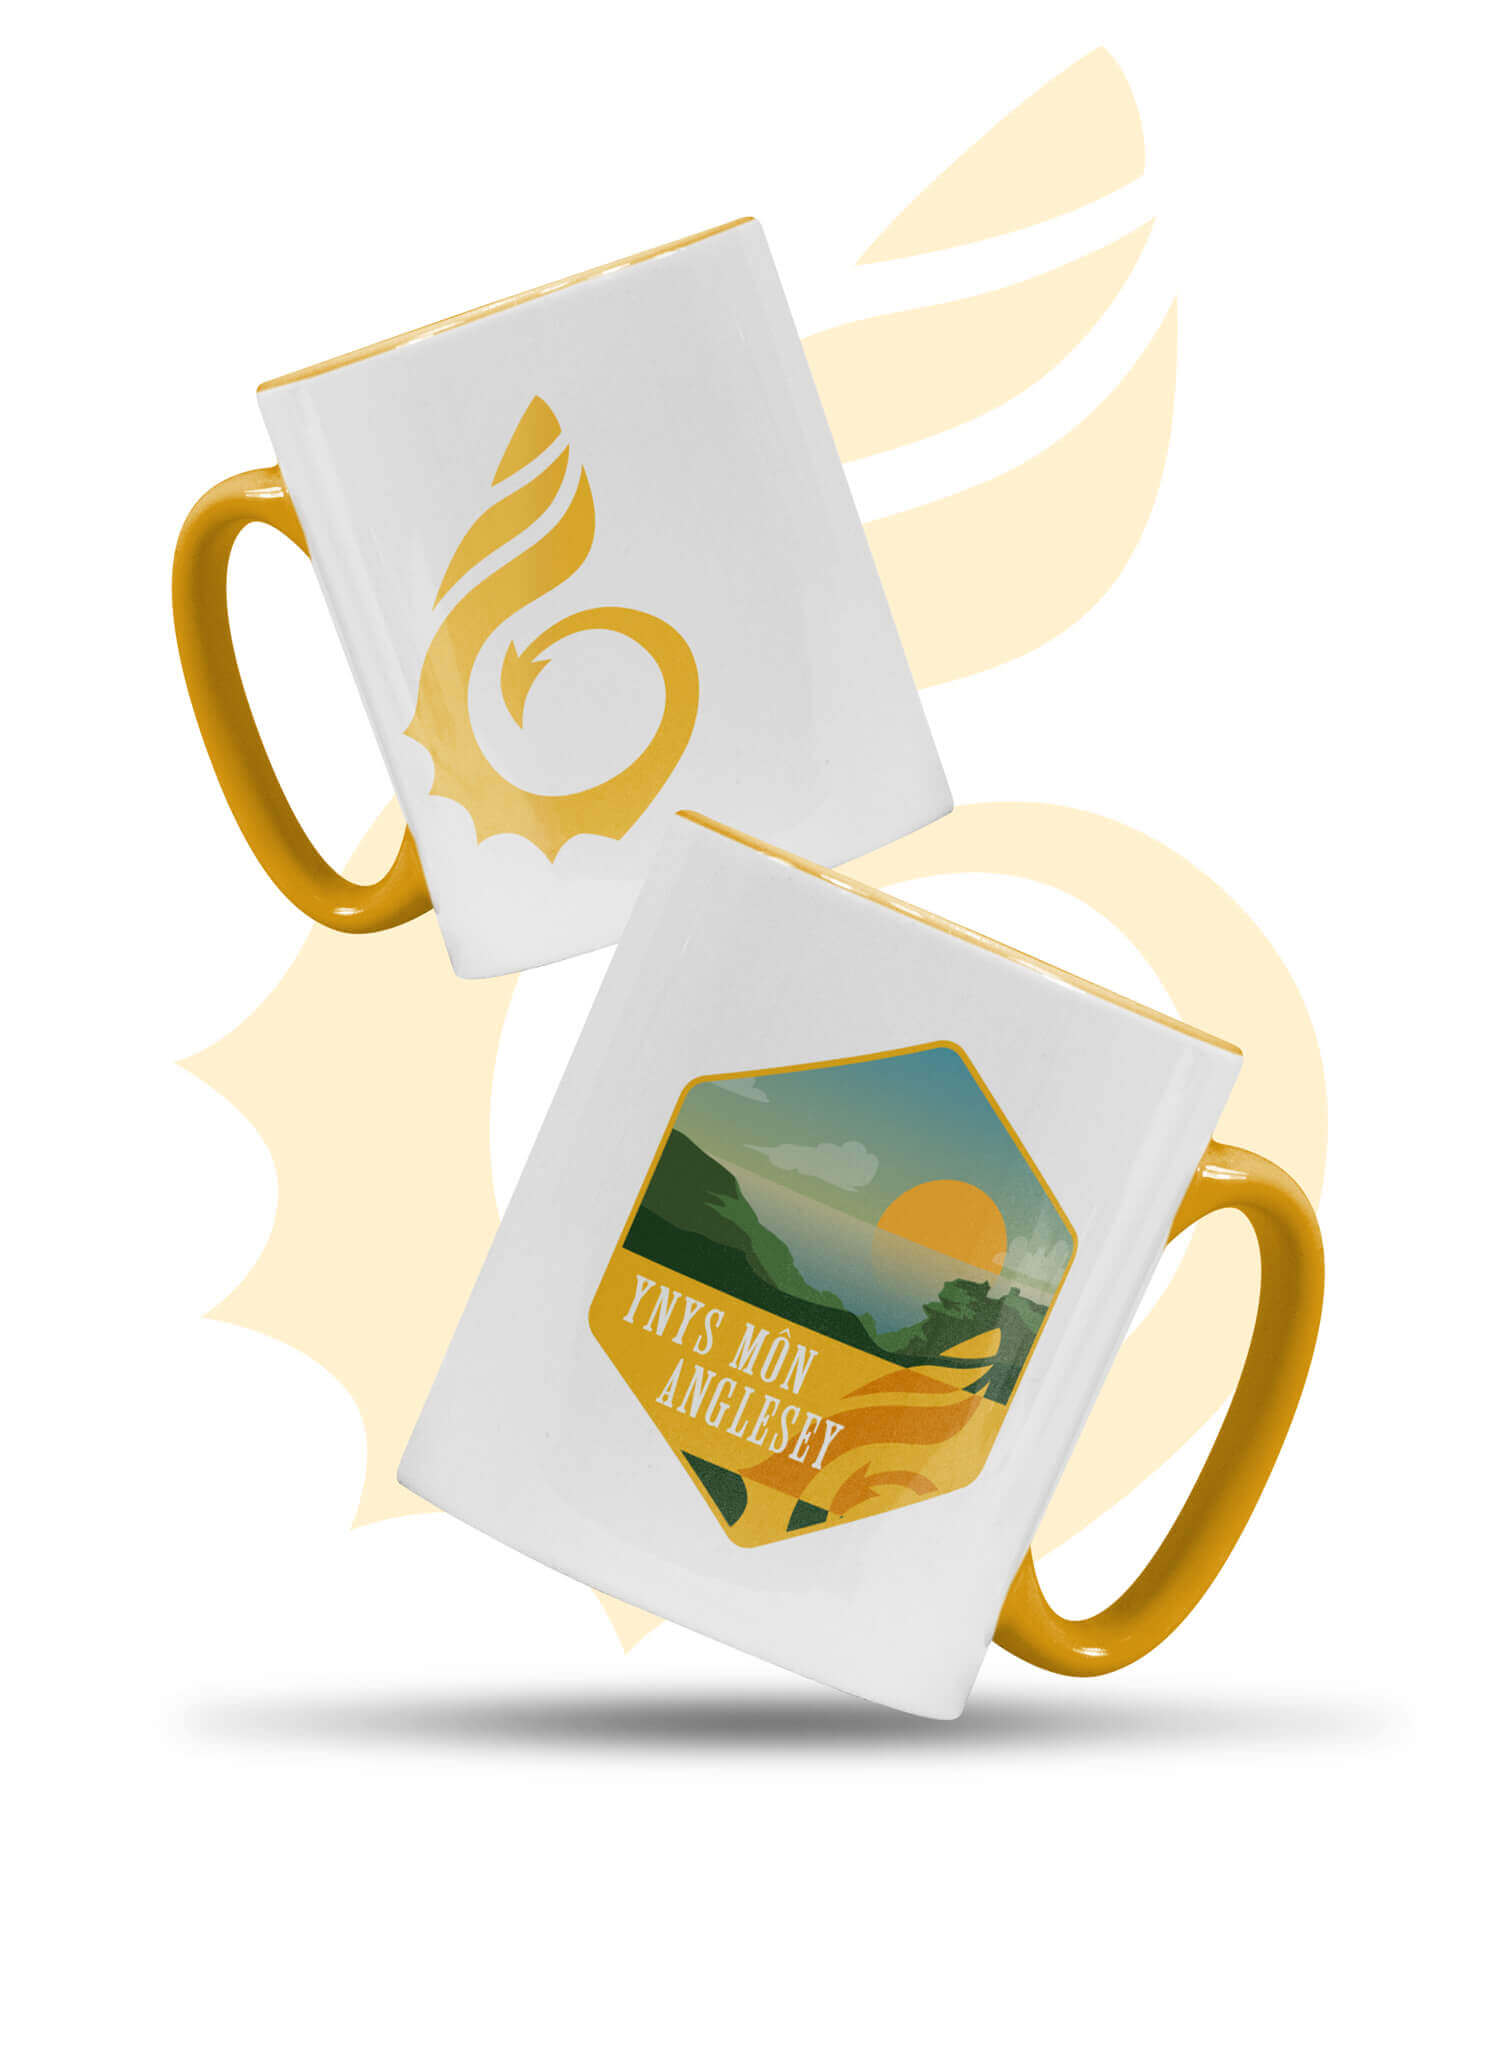 Anglesey design ceramic tea or coffee mug with yellow inner lip and handle.